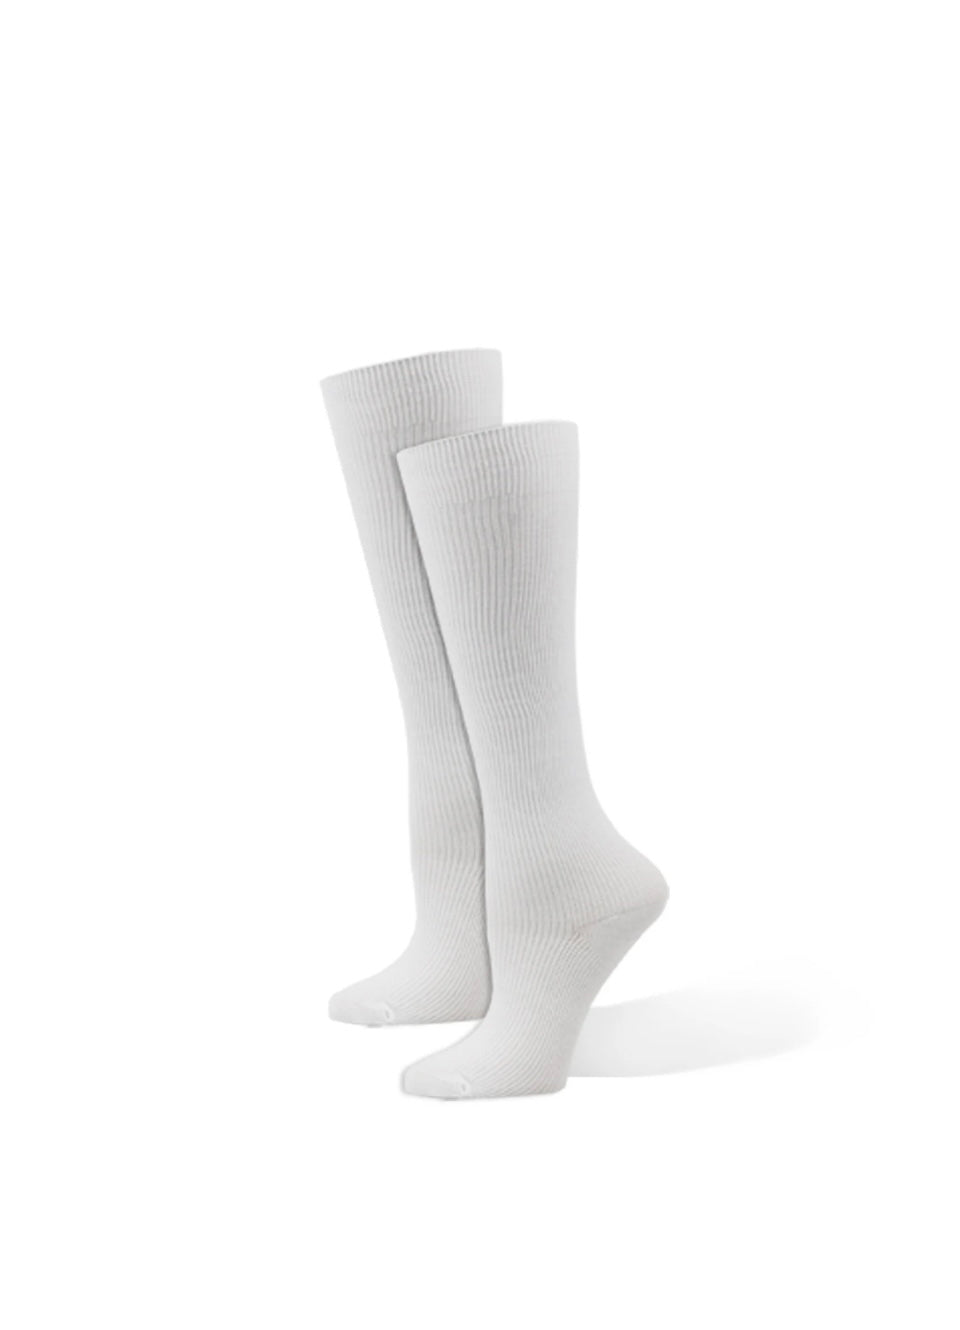 Solid White
Compression Socks